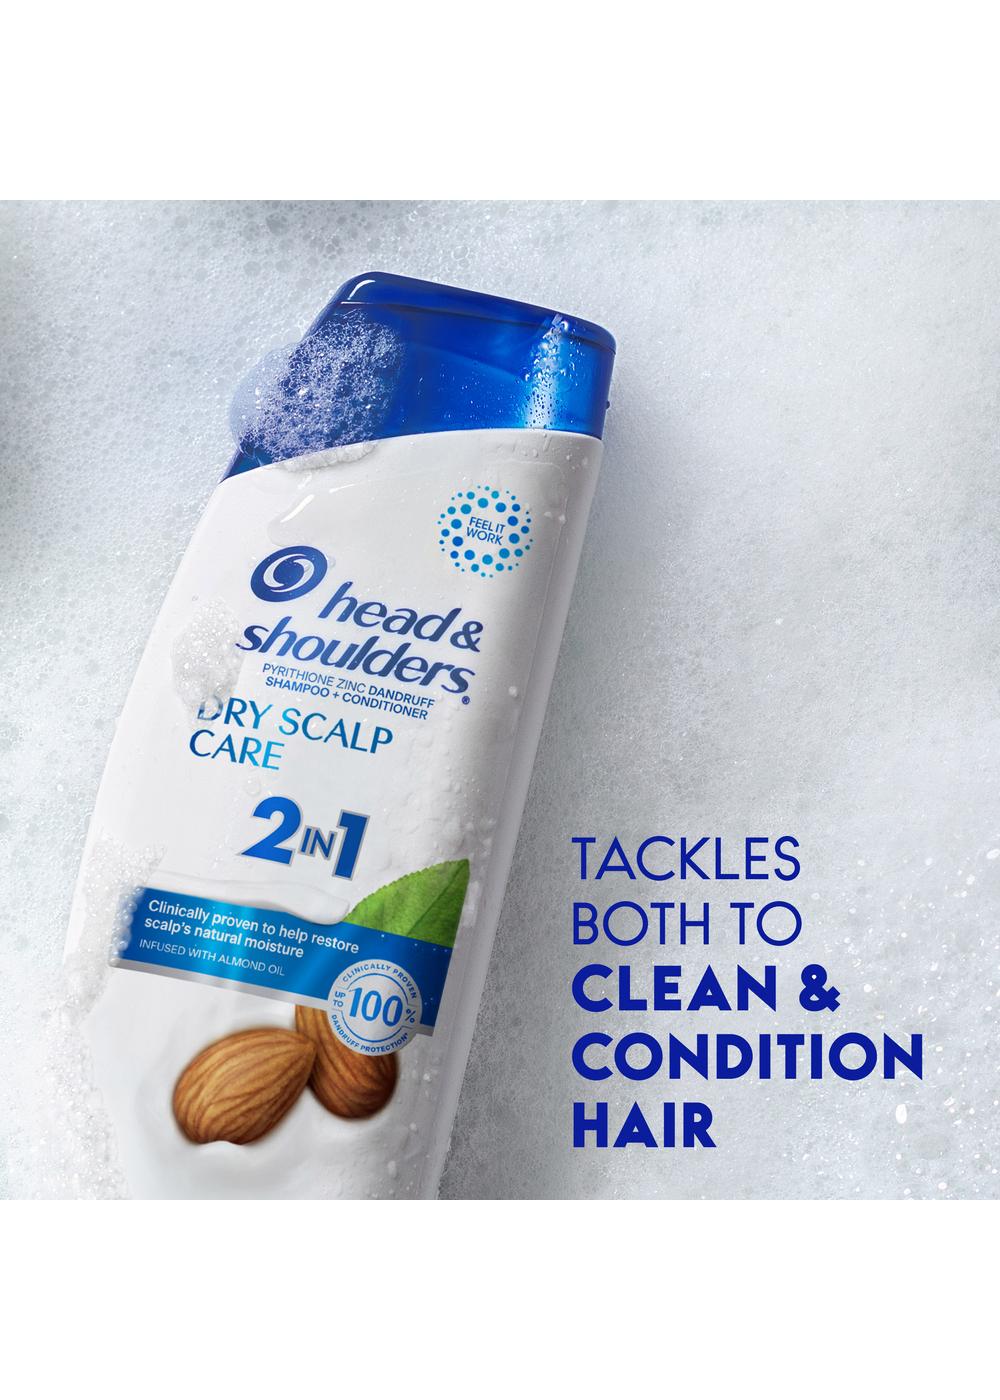 Head & Shoulders 2 in 1 Dandruff Shampoo + Conditioner - Dry Scalp Care; image 11 of 11